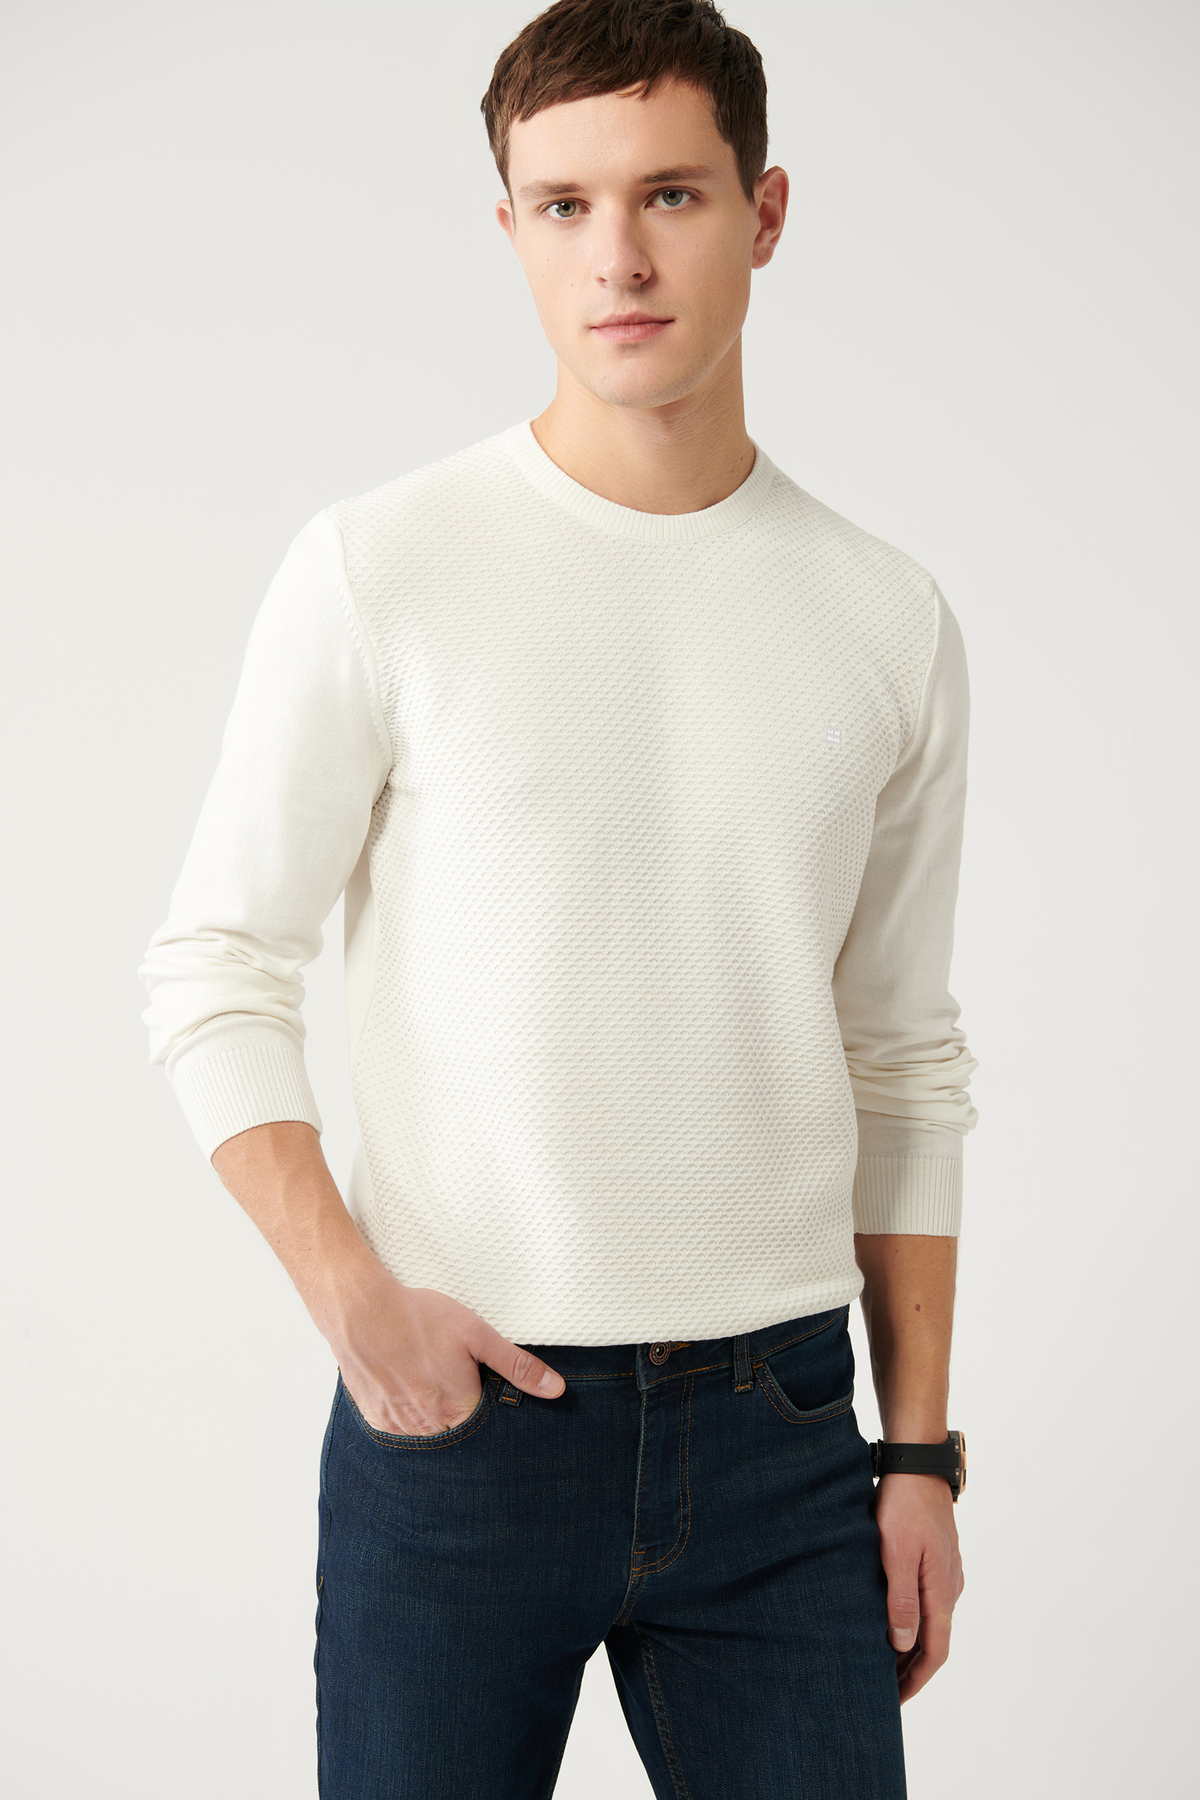 Levně Avva Men's White Knitwear Sweater Crew Neck Front Textured Cotton Regular Fit